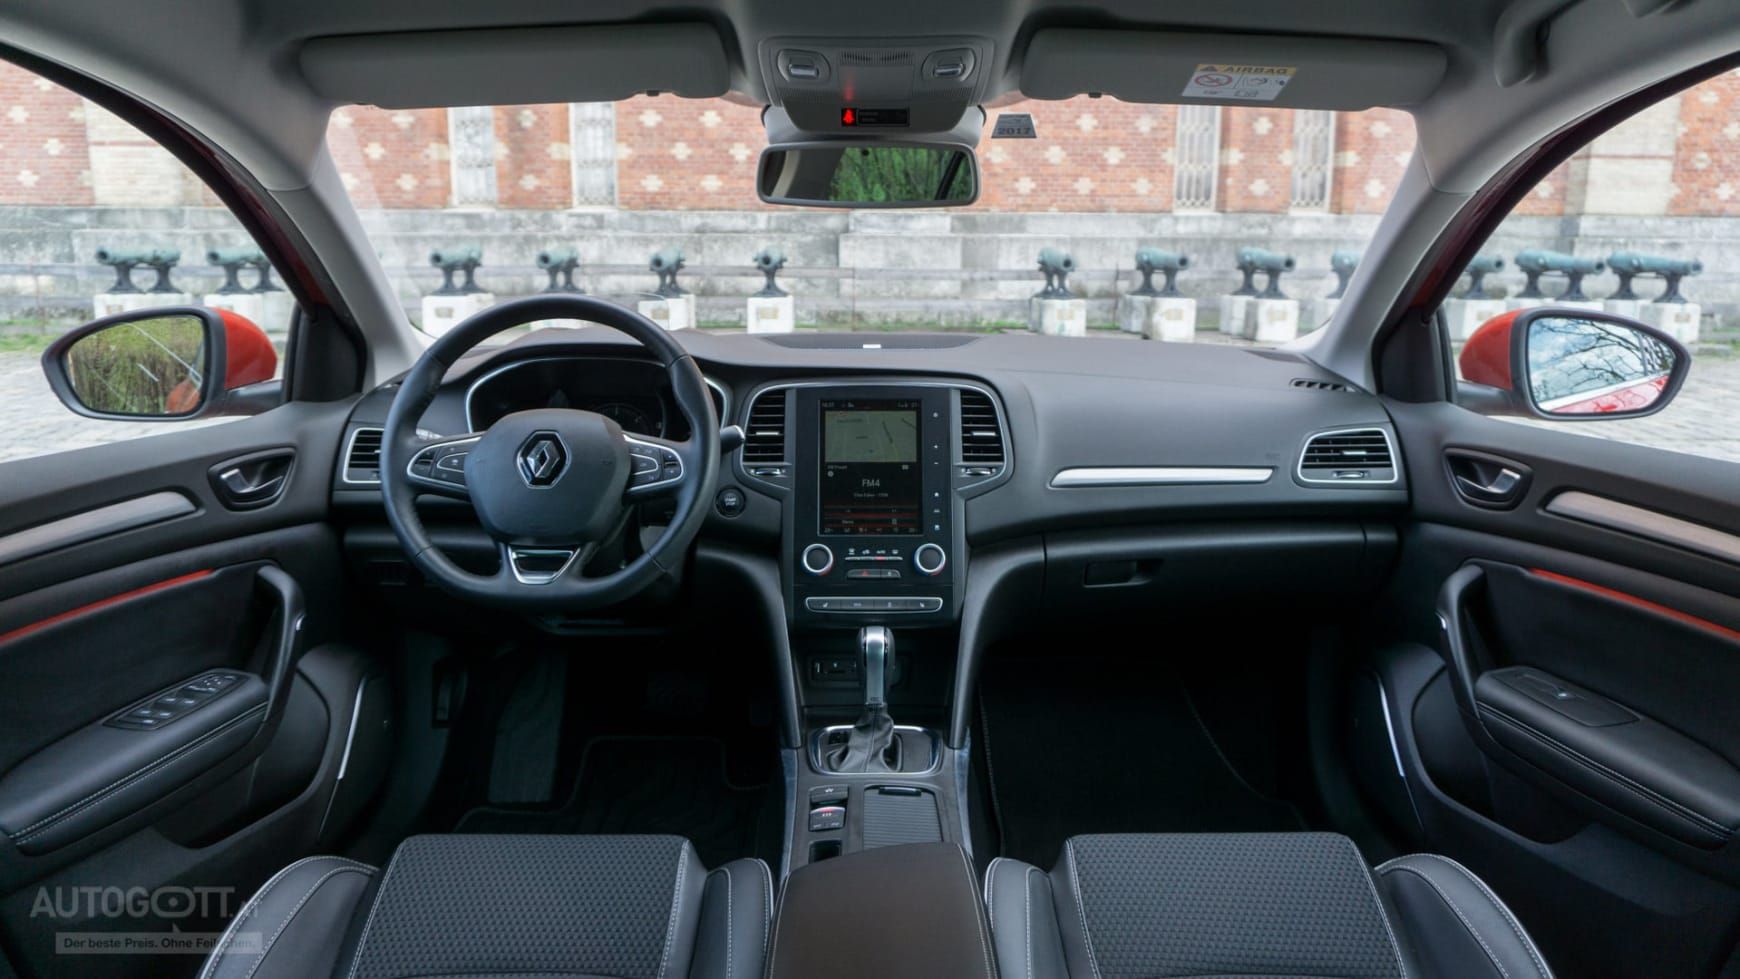 Renault Megane Grandtour Bose Emotionaler Kompaktkombi Autogott At